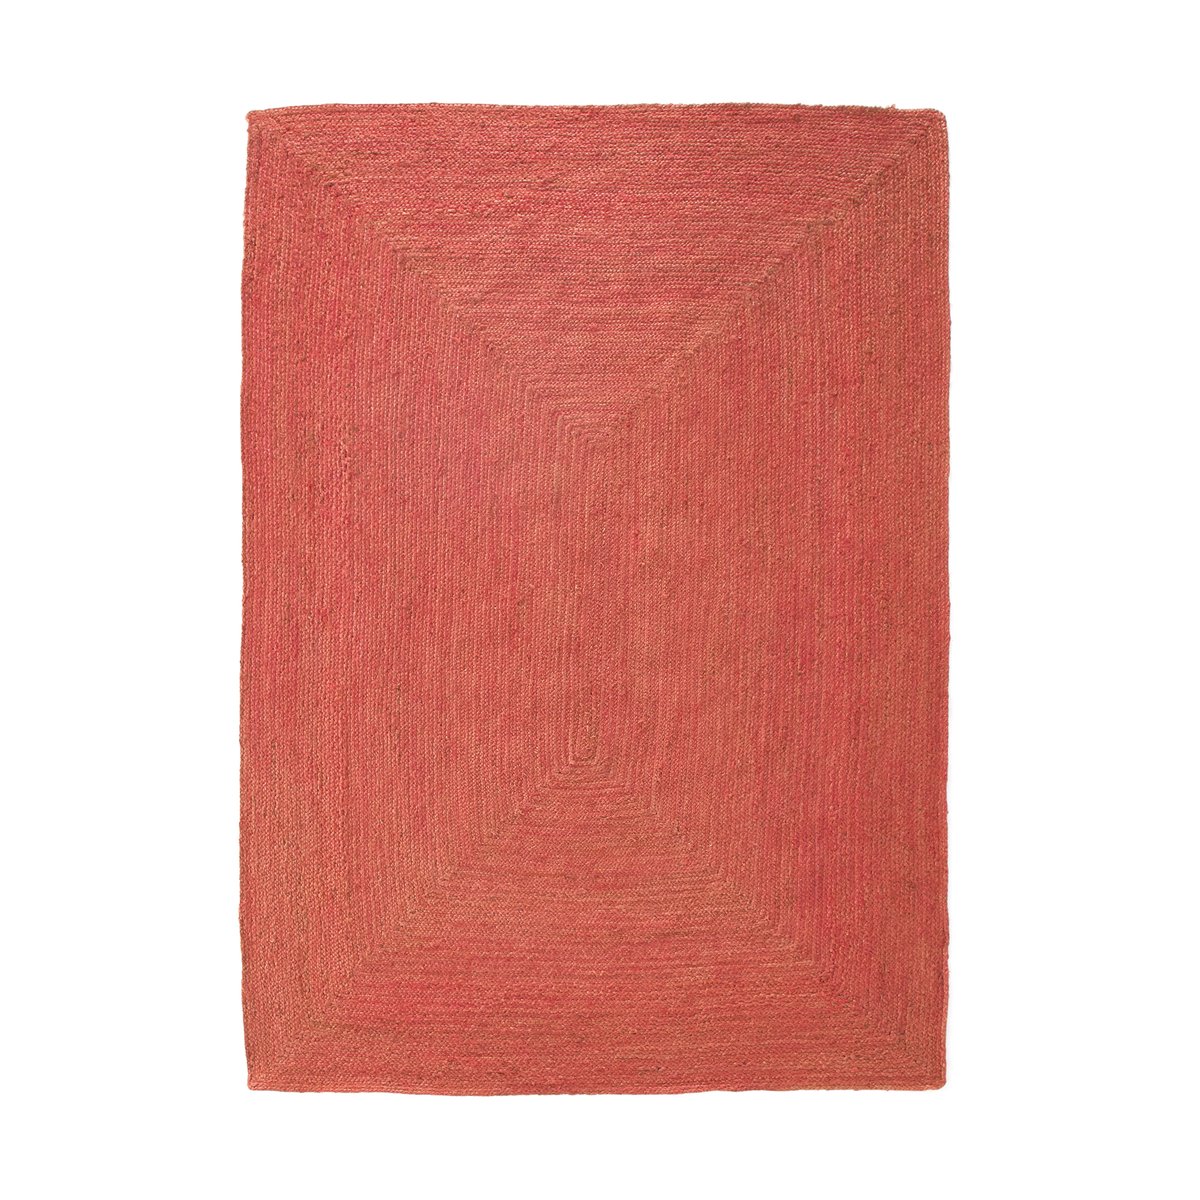 Ковер La Redoute Из цветного джута Bissaka 160 x 230 см оранжевый, размер 160 x 230 см - фото 1